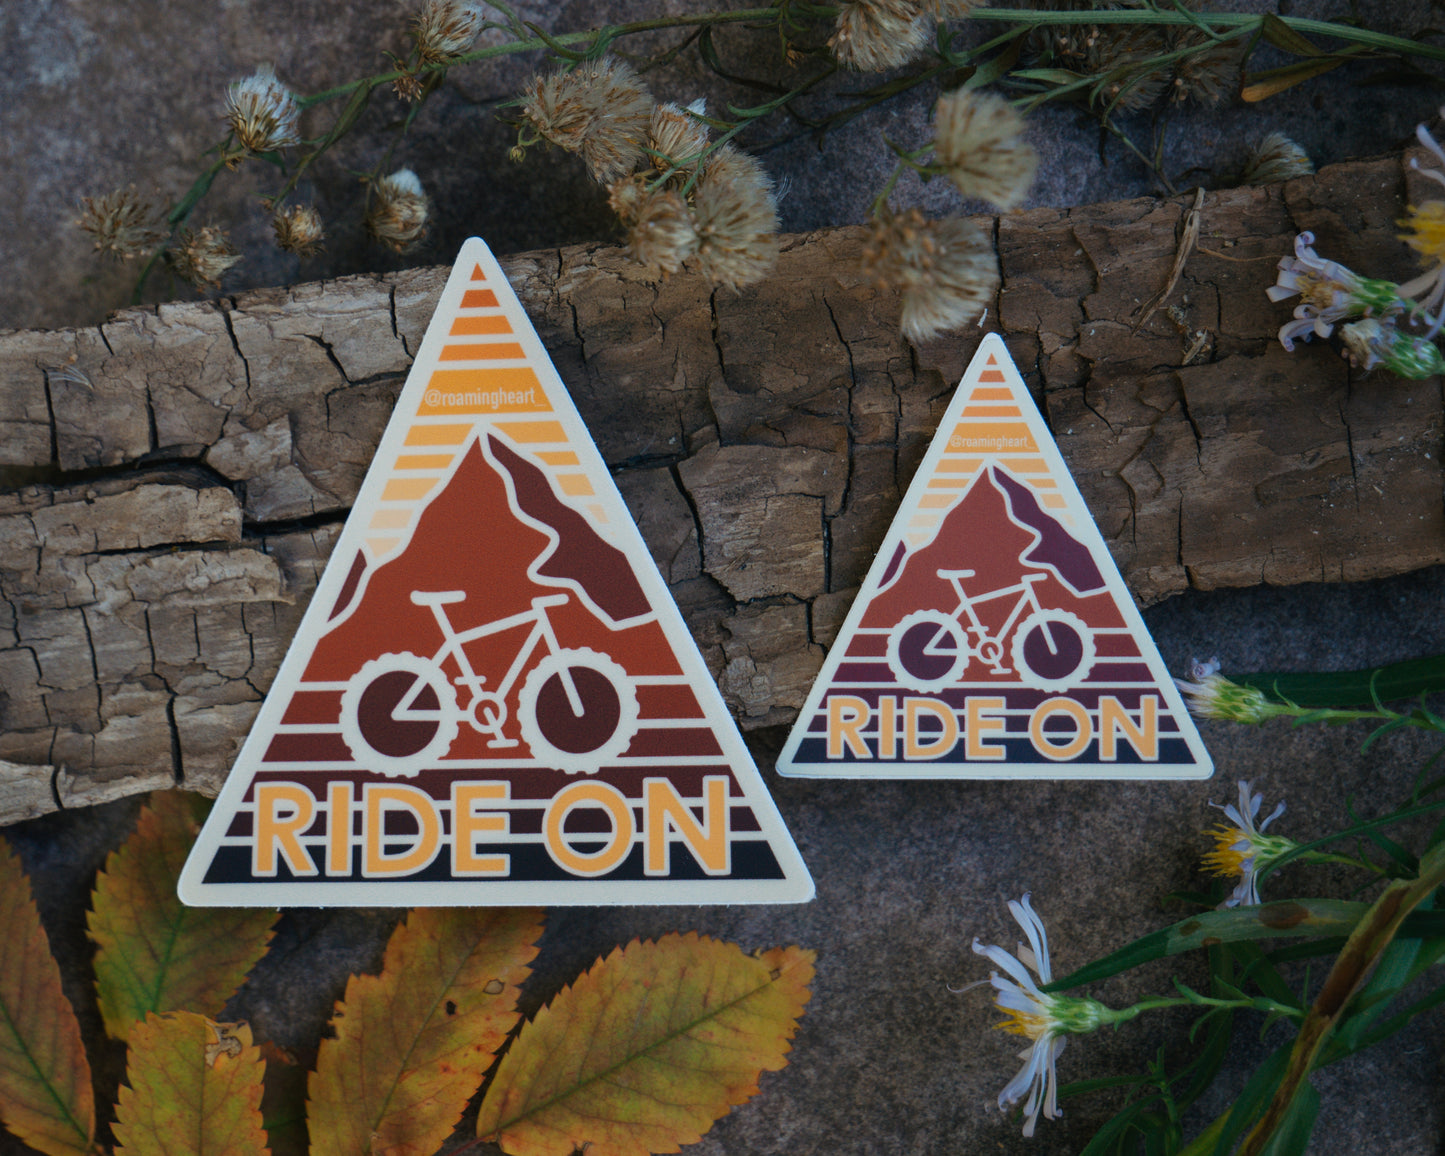 Ride On Mountain Bike | Sticker